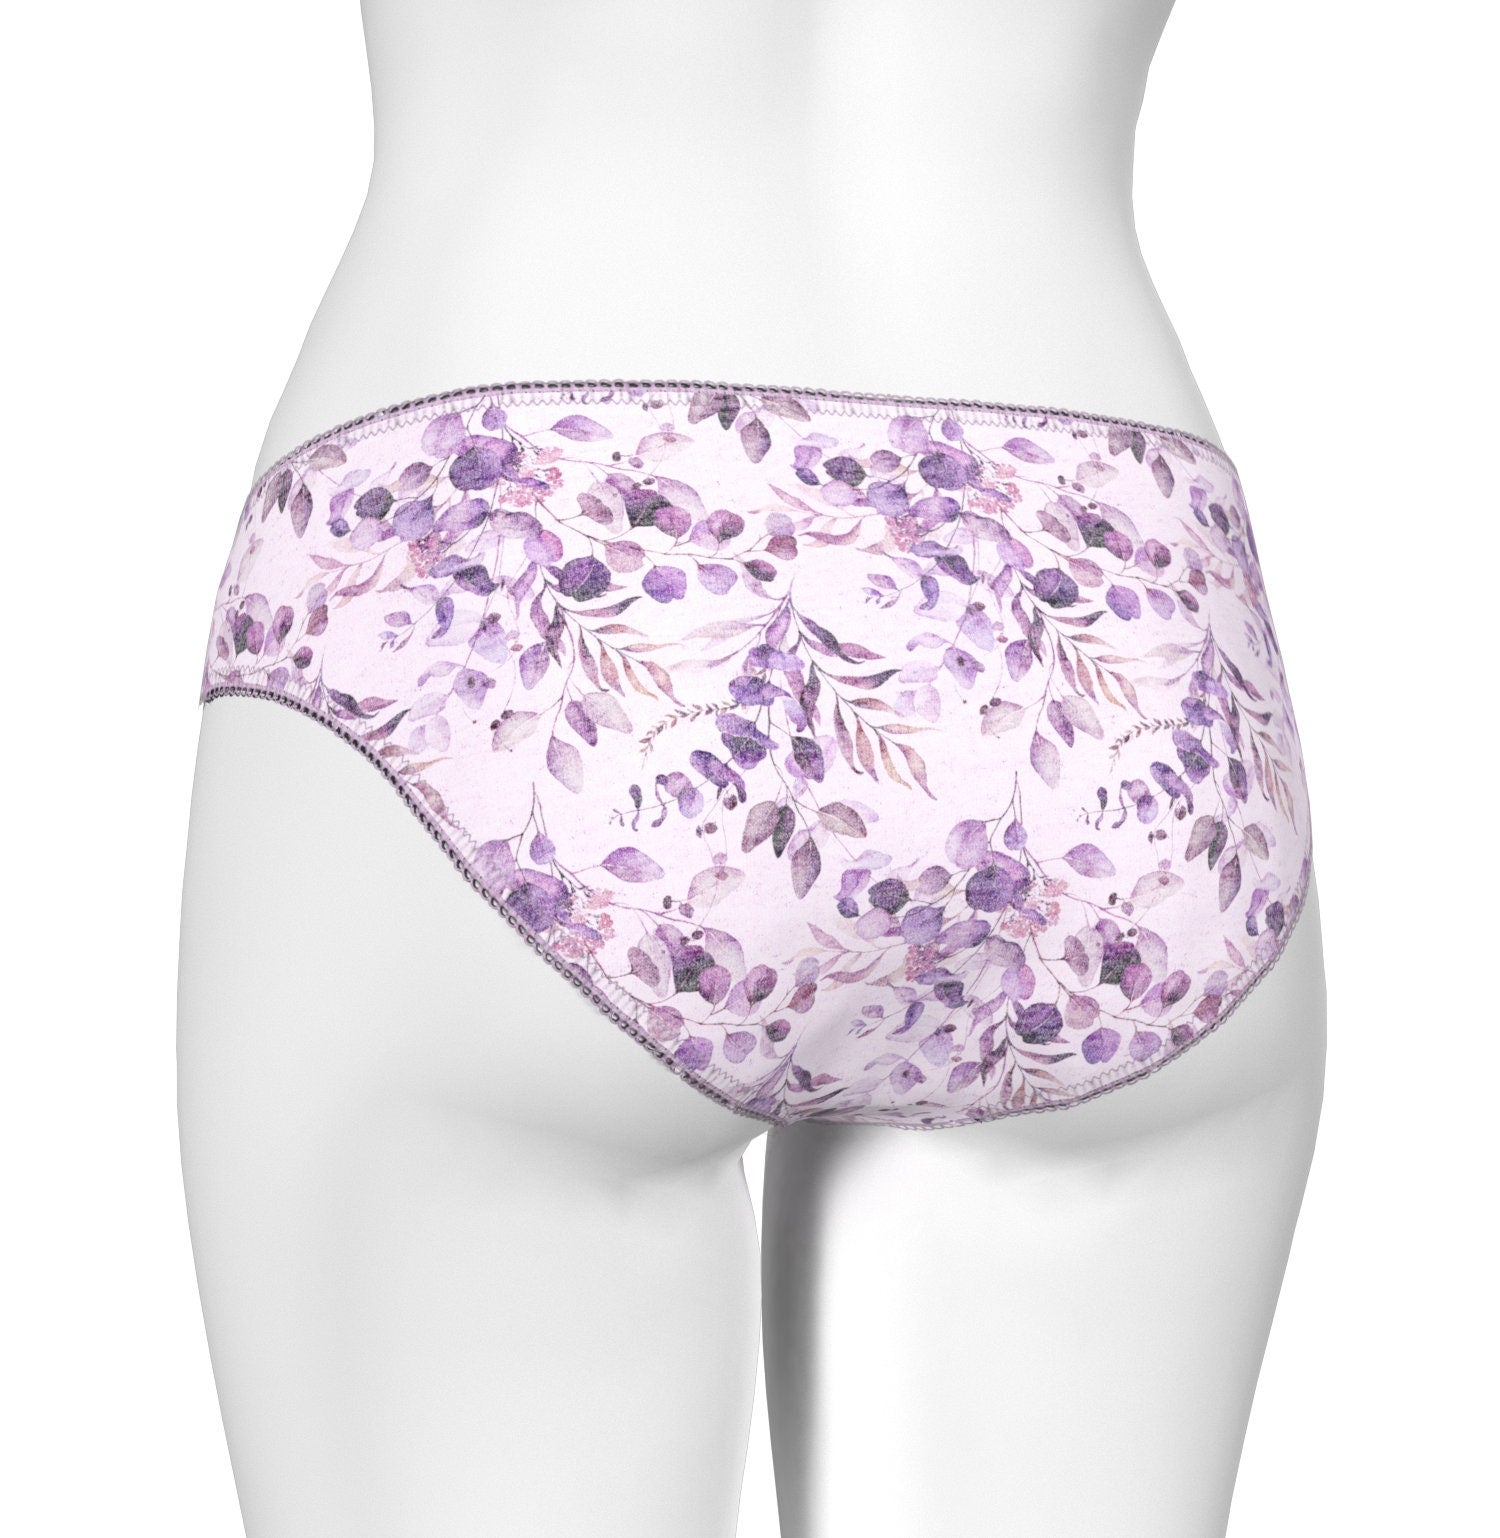 Downloadable PDF "Anna" Hipster Panty Sewing Pattern, Sizes XS-L